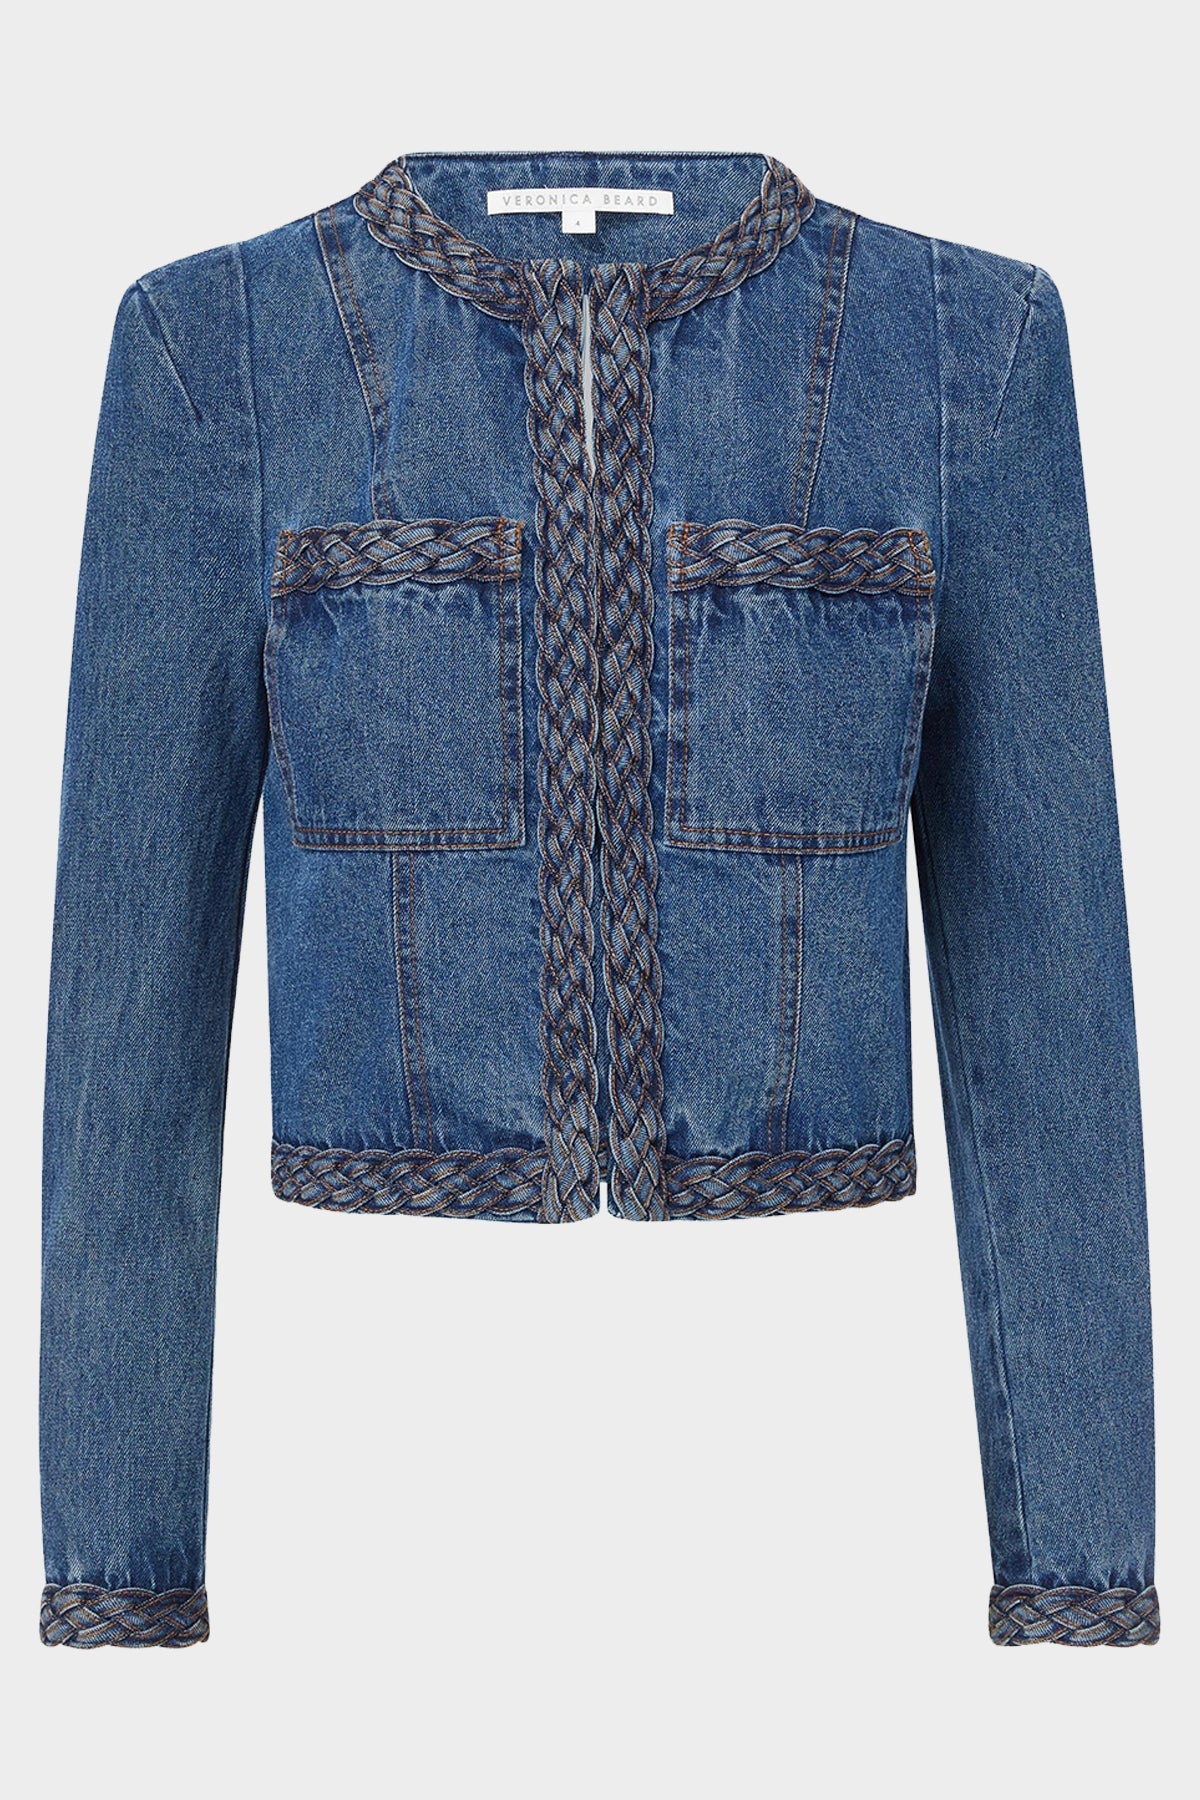 Arrowe Denim Jacket in Stone Bright Blue - shop-olivia.com